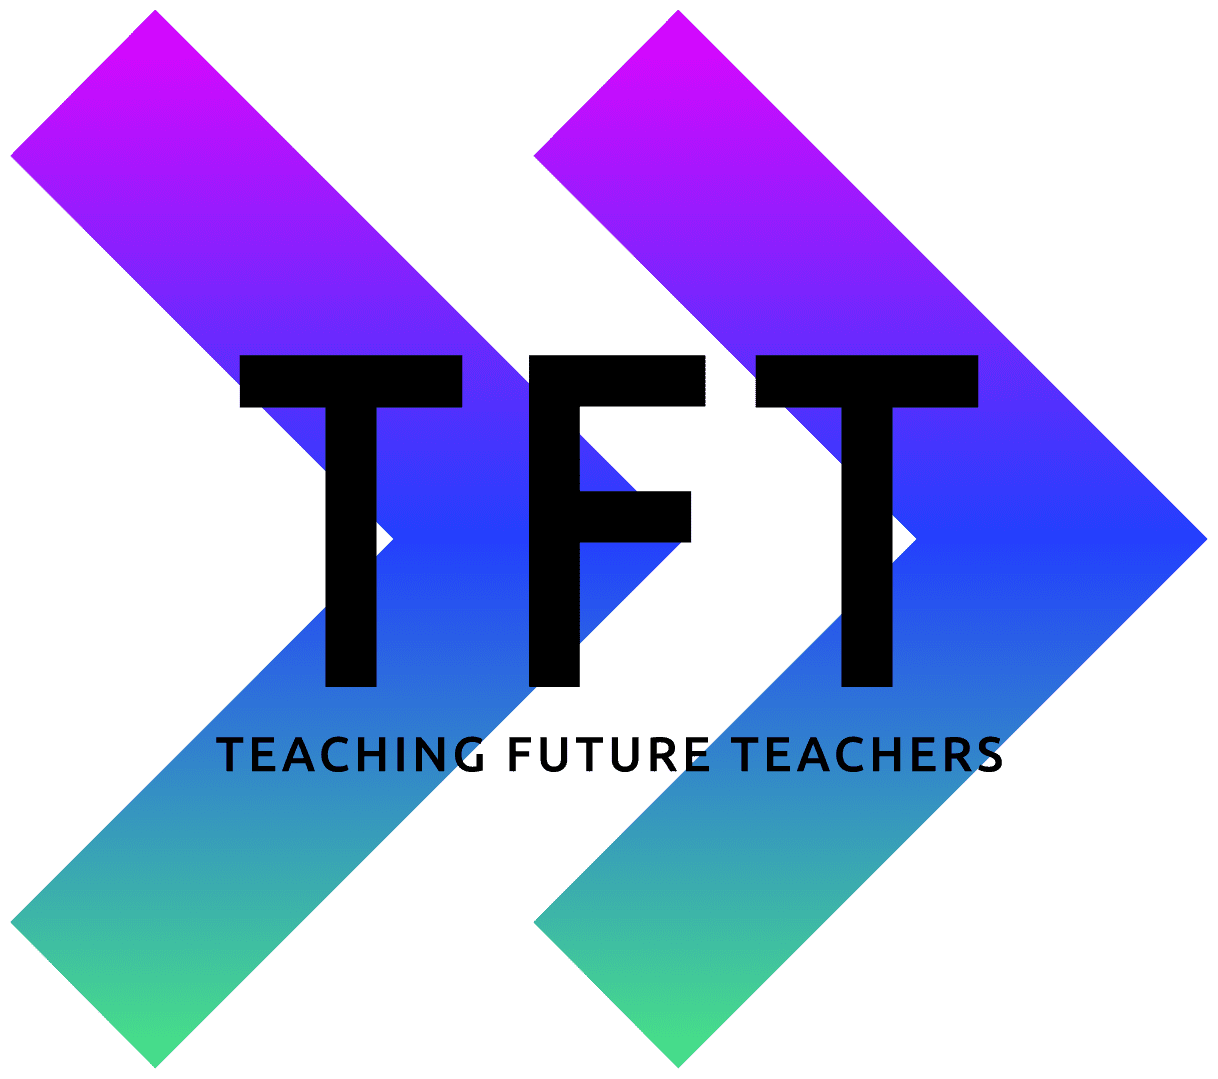 TFT - Teaching Future Teachers